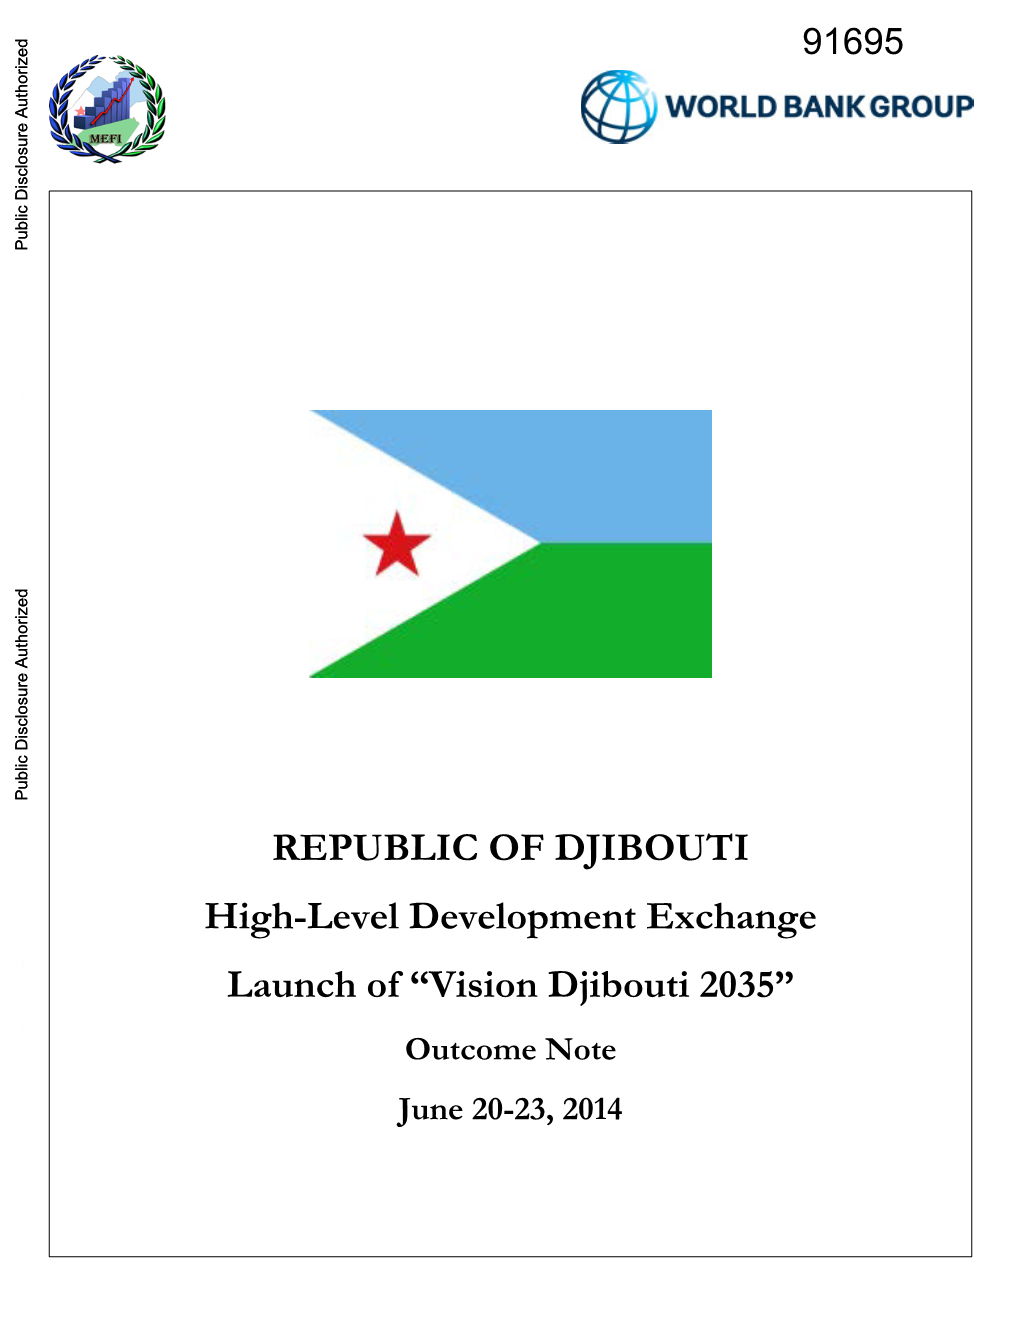 Vision 2035” Djibouti, June 20-23, 2014